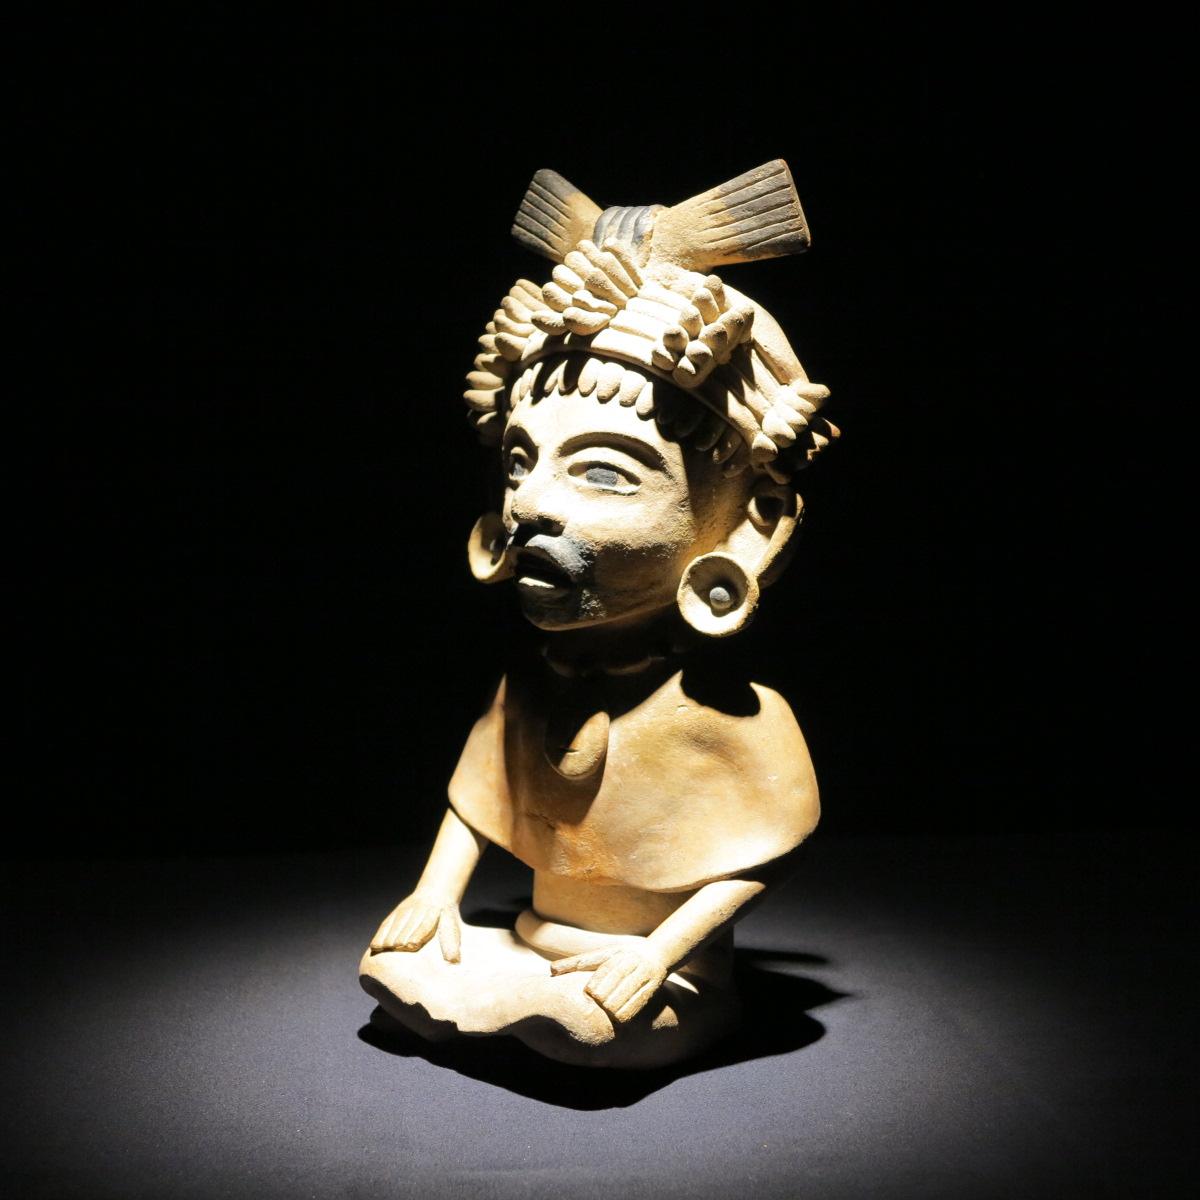 Veracruz Mexico Pre-Columbian ceramic Warrior figure sculpture For Sale 1